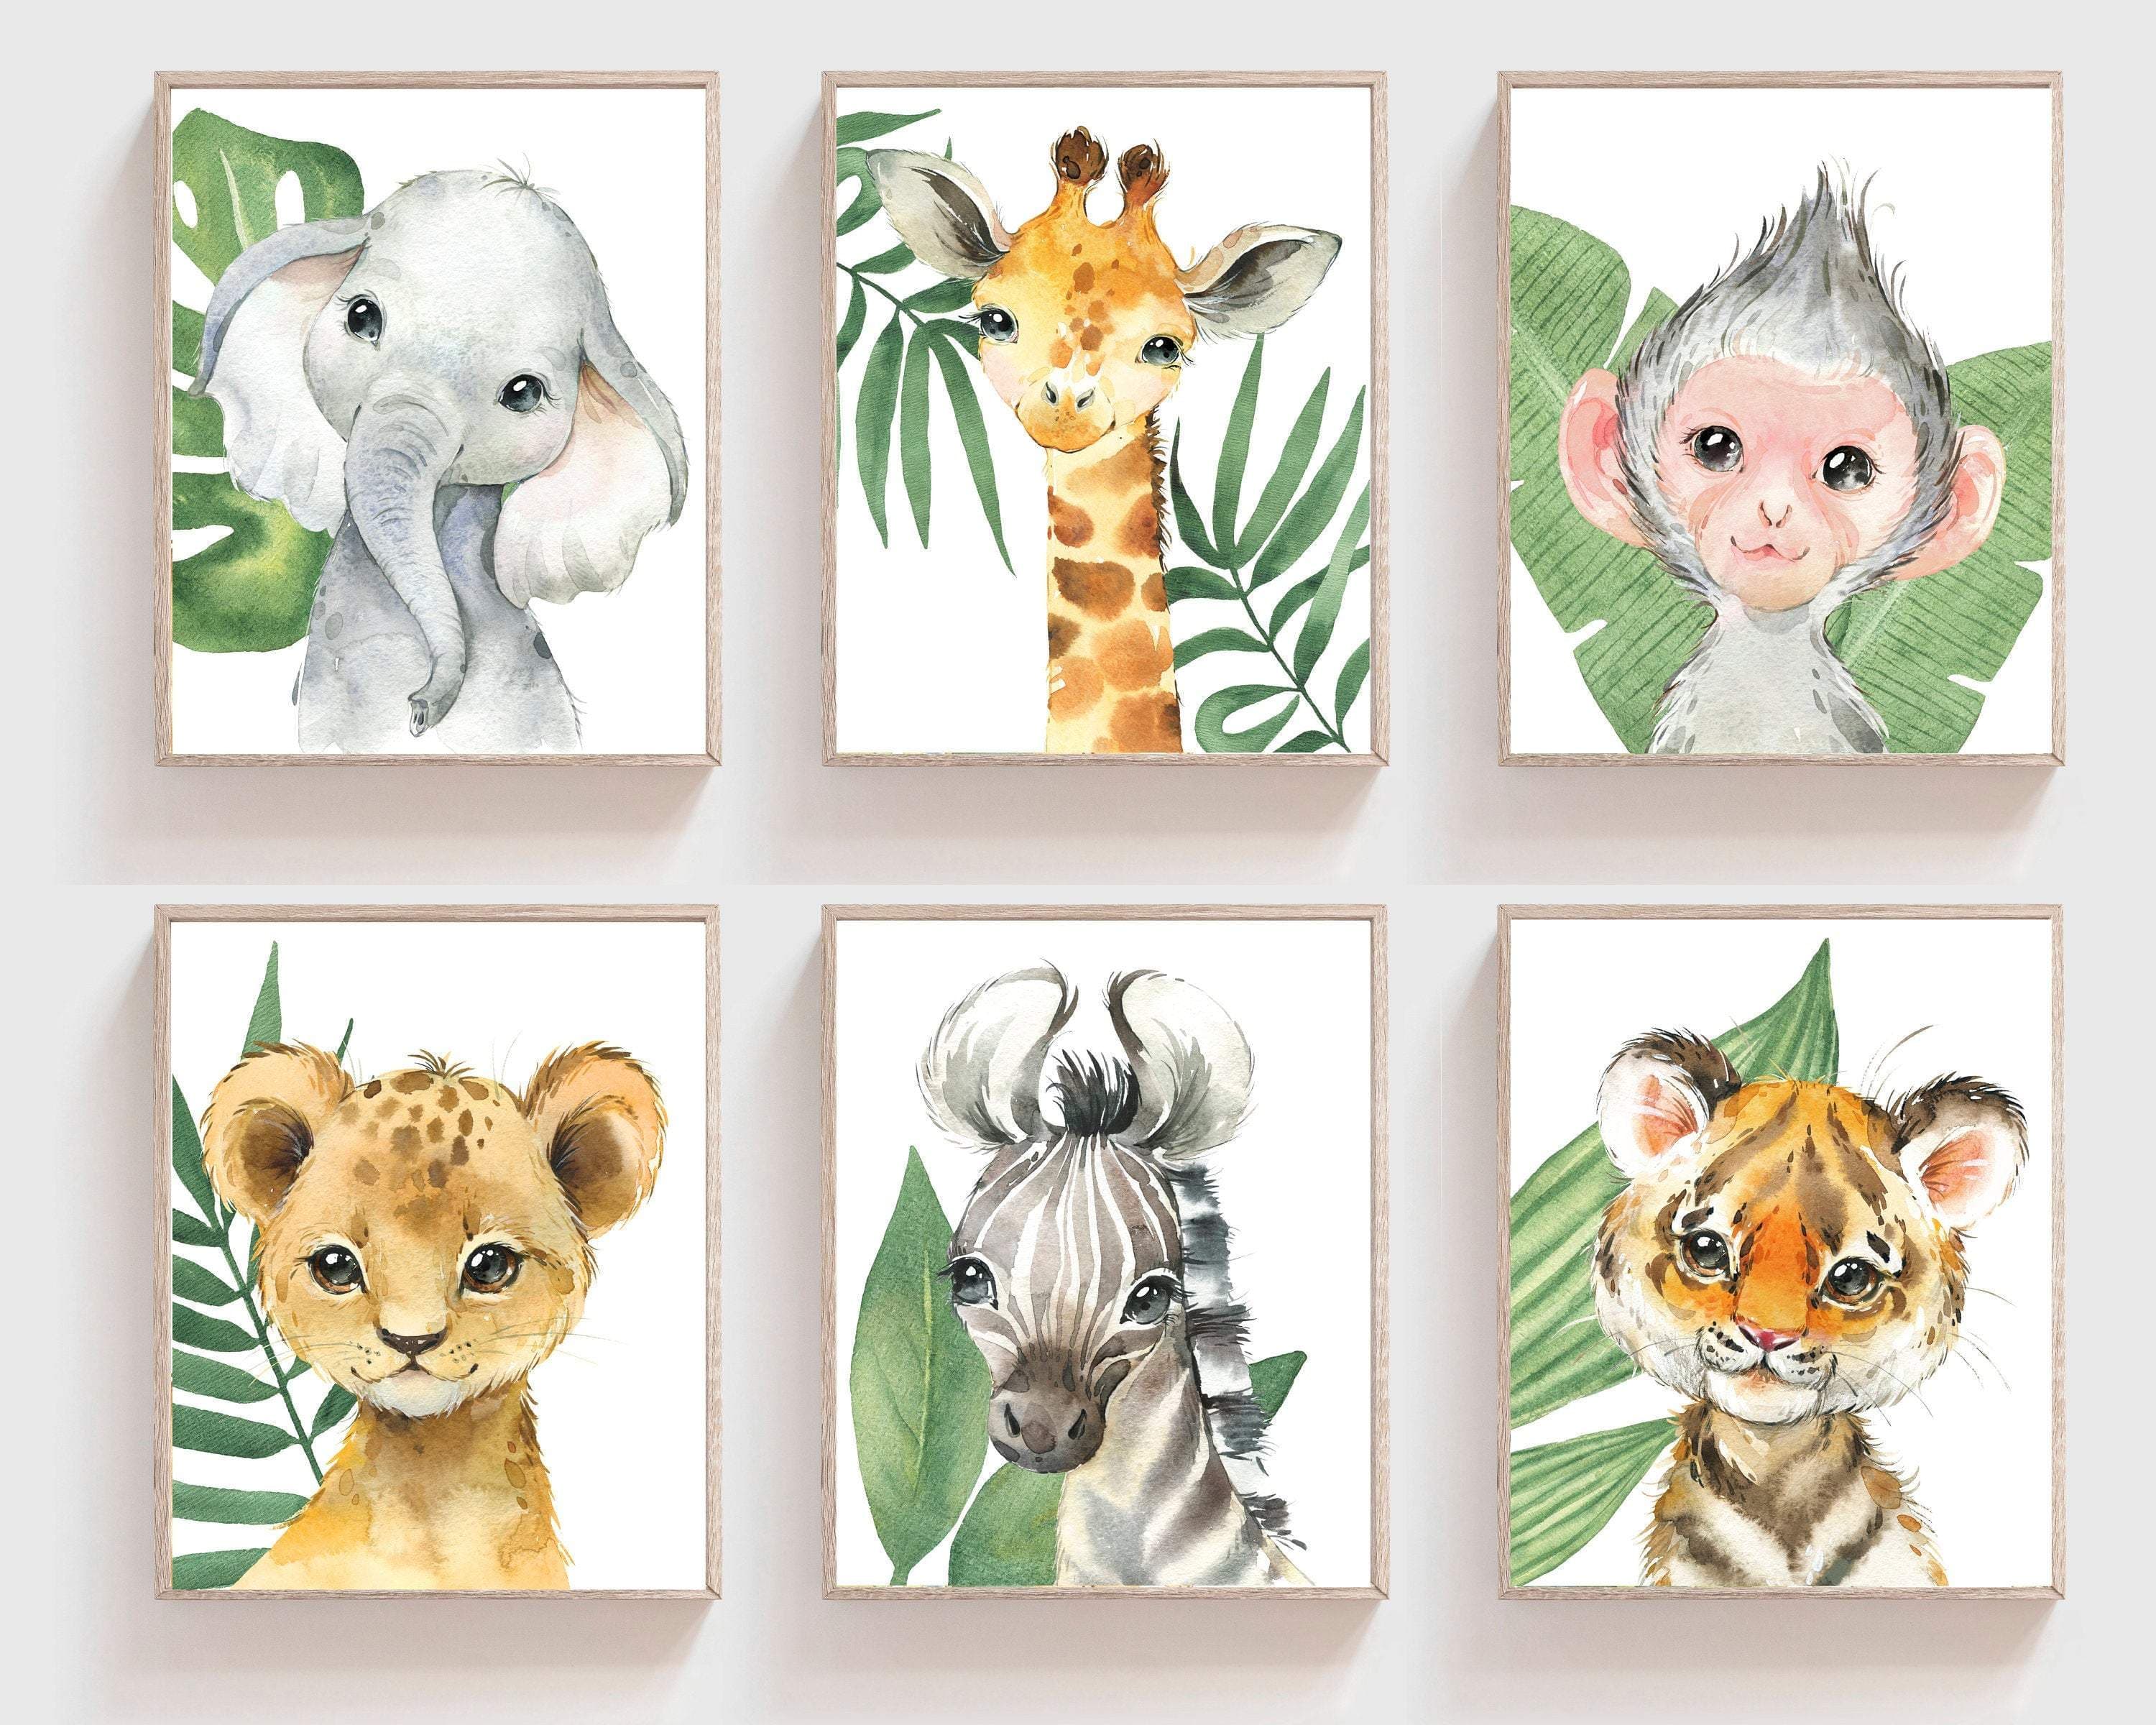 8x10 Boy nursery decor - Safari nursery prints - Baby animal prints - Safari boy nursery - Safari animals printable - Boy nursery prints - H2497 nursery art print baby nursery bedroom decor